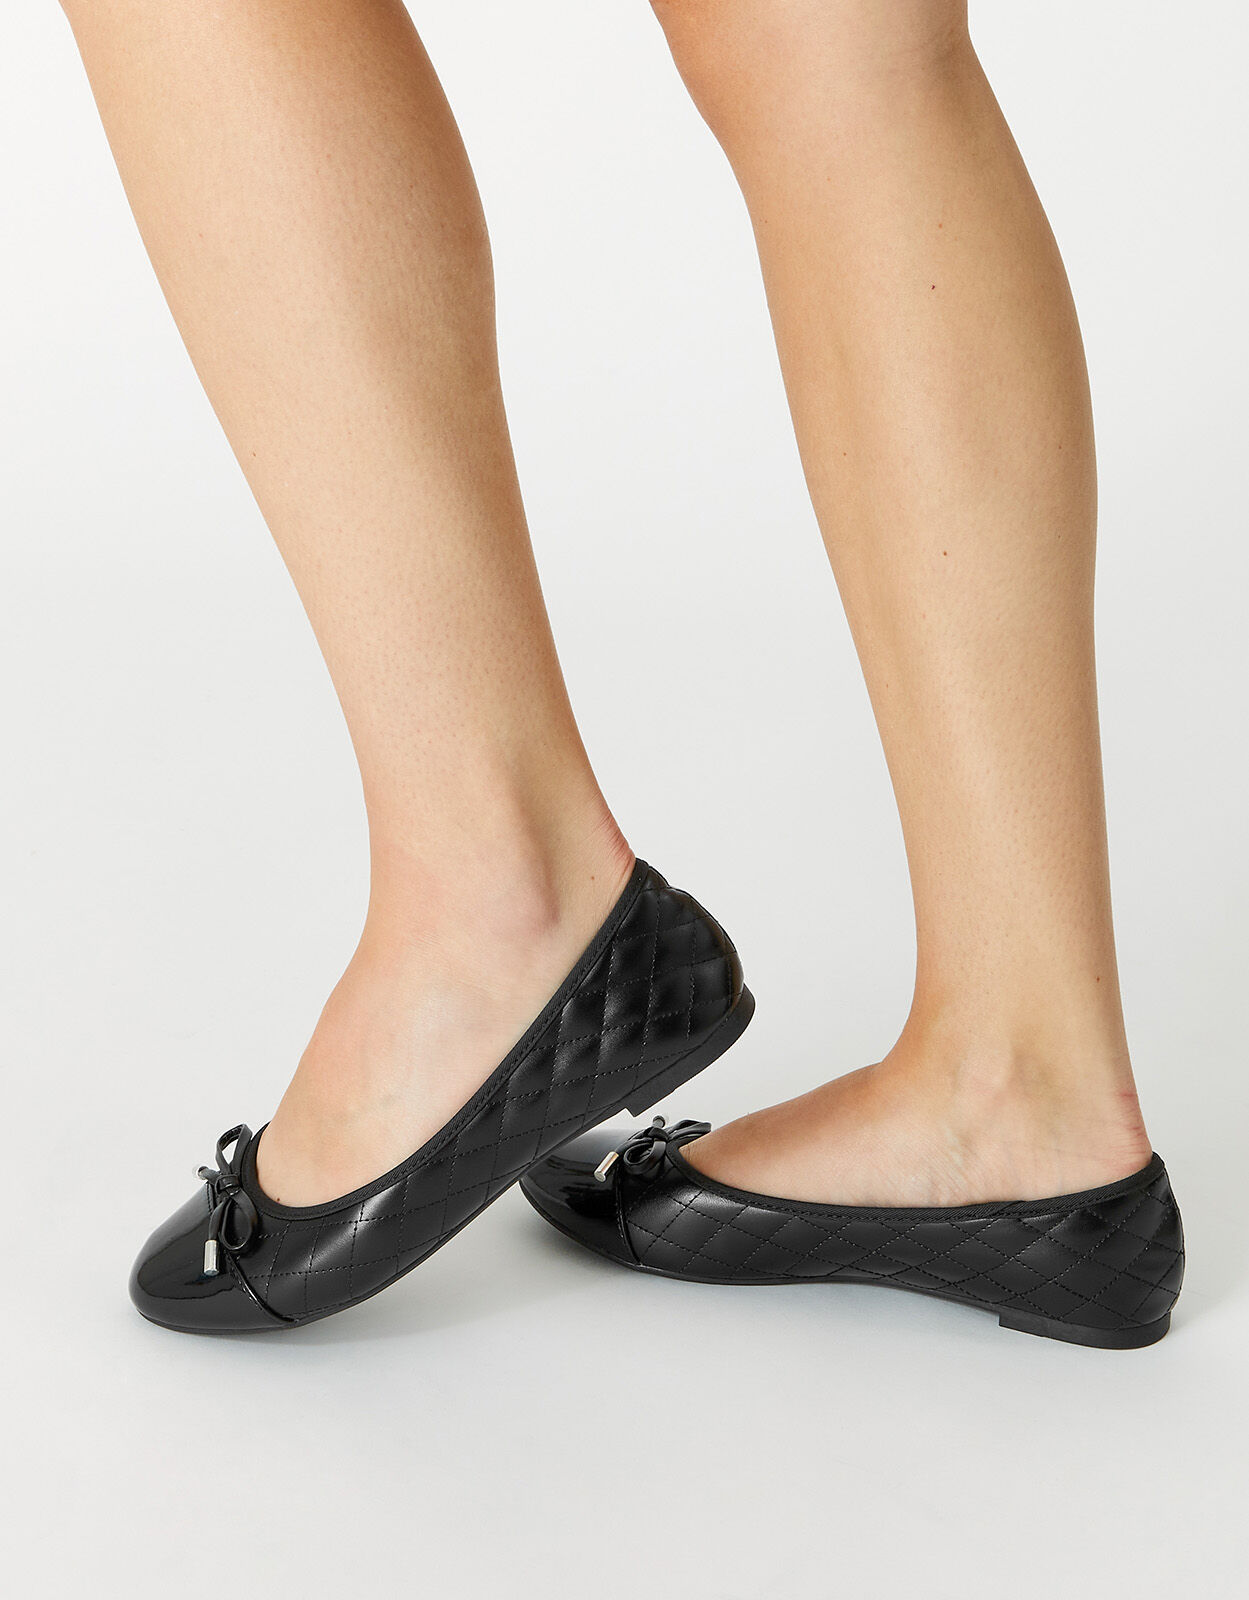 Shop Women's Ballet Flat Shoes Online – FRANKIE4